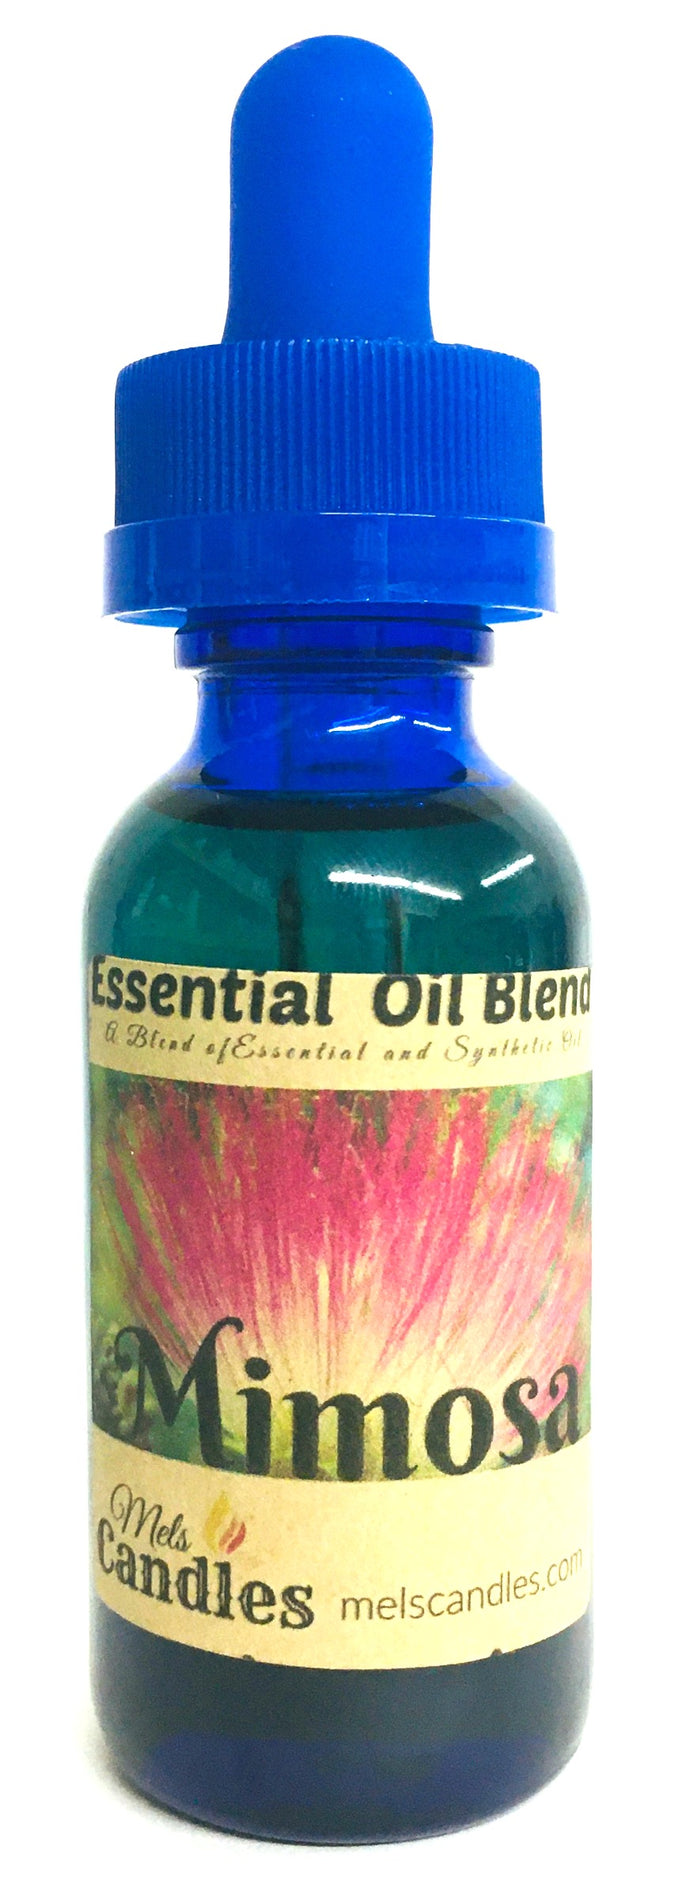 Mimosa 1 ounce   29.5 ml BLUE GLASS Bottle of Skin Safe Essential Oil Blend Fragrance Oil